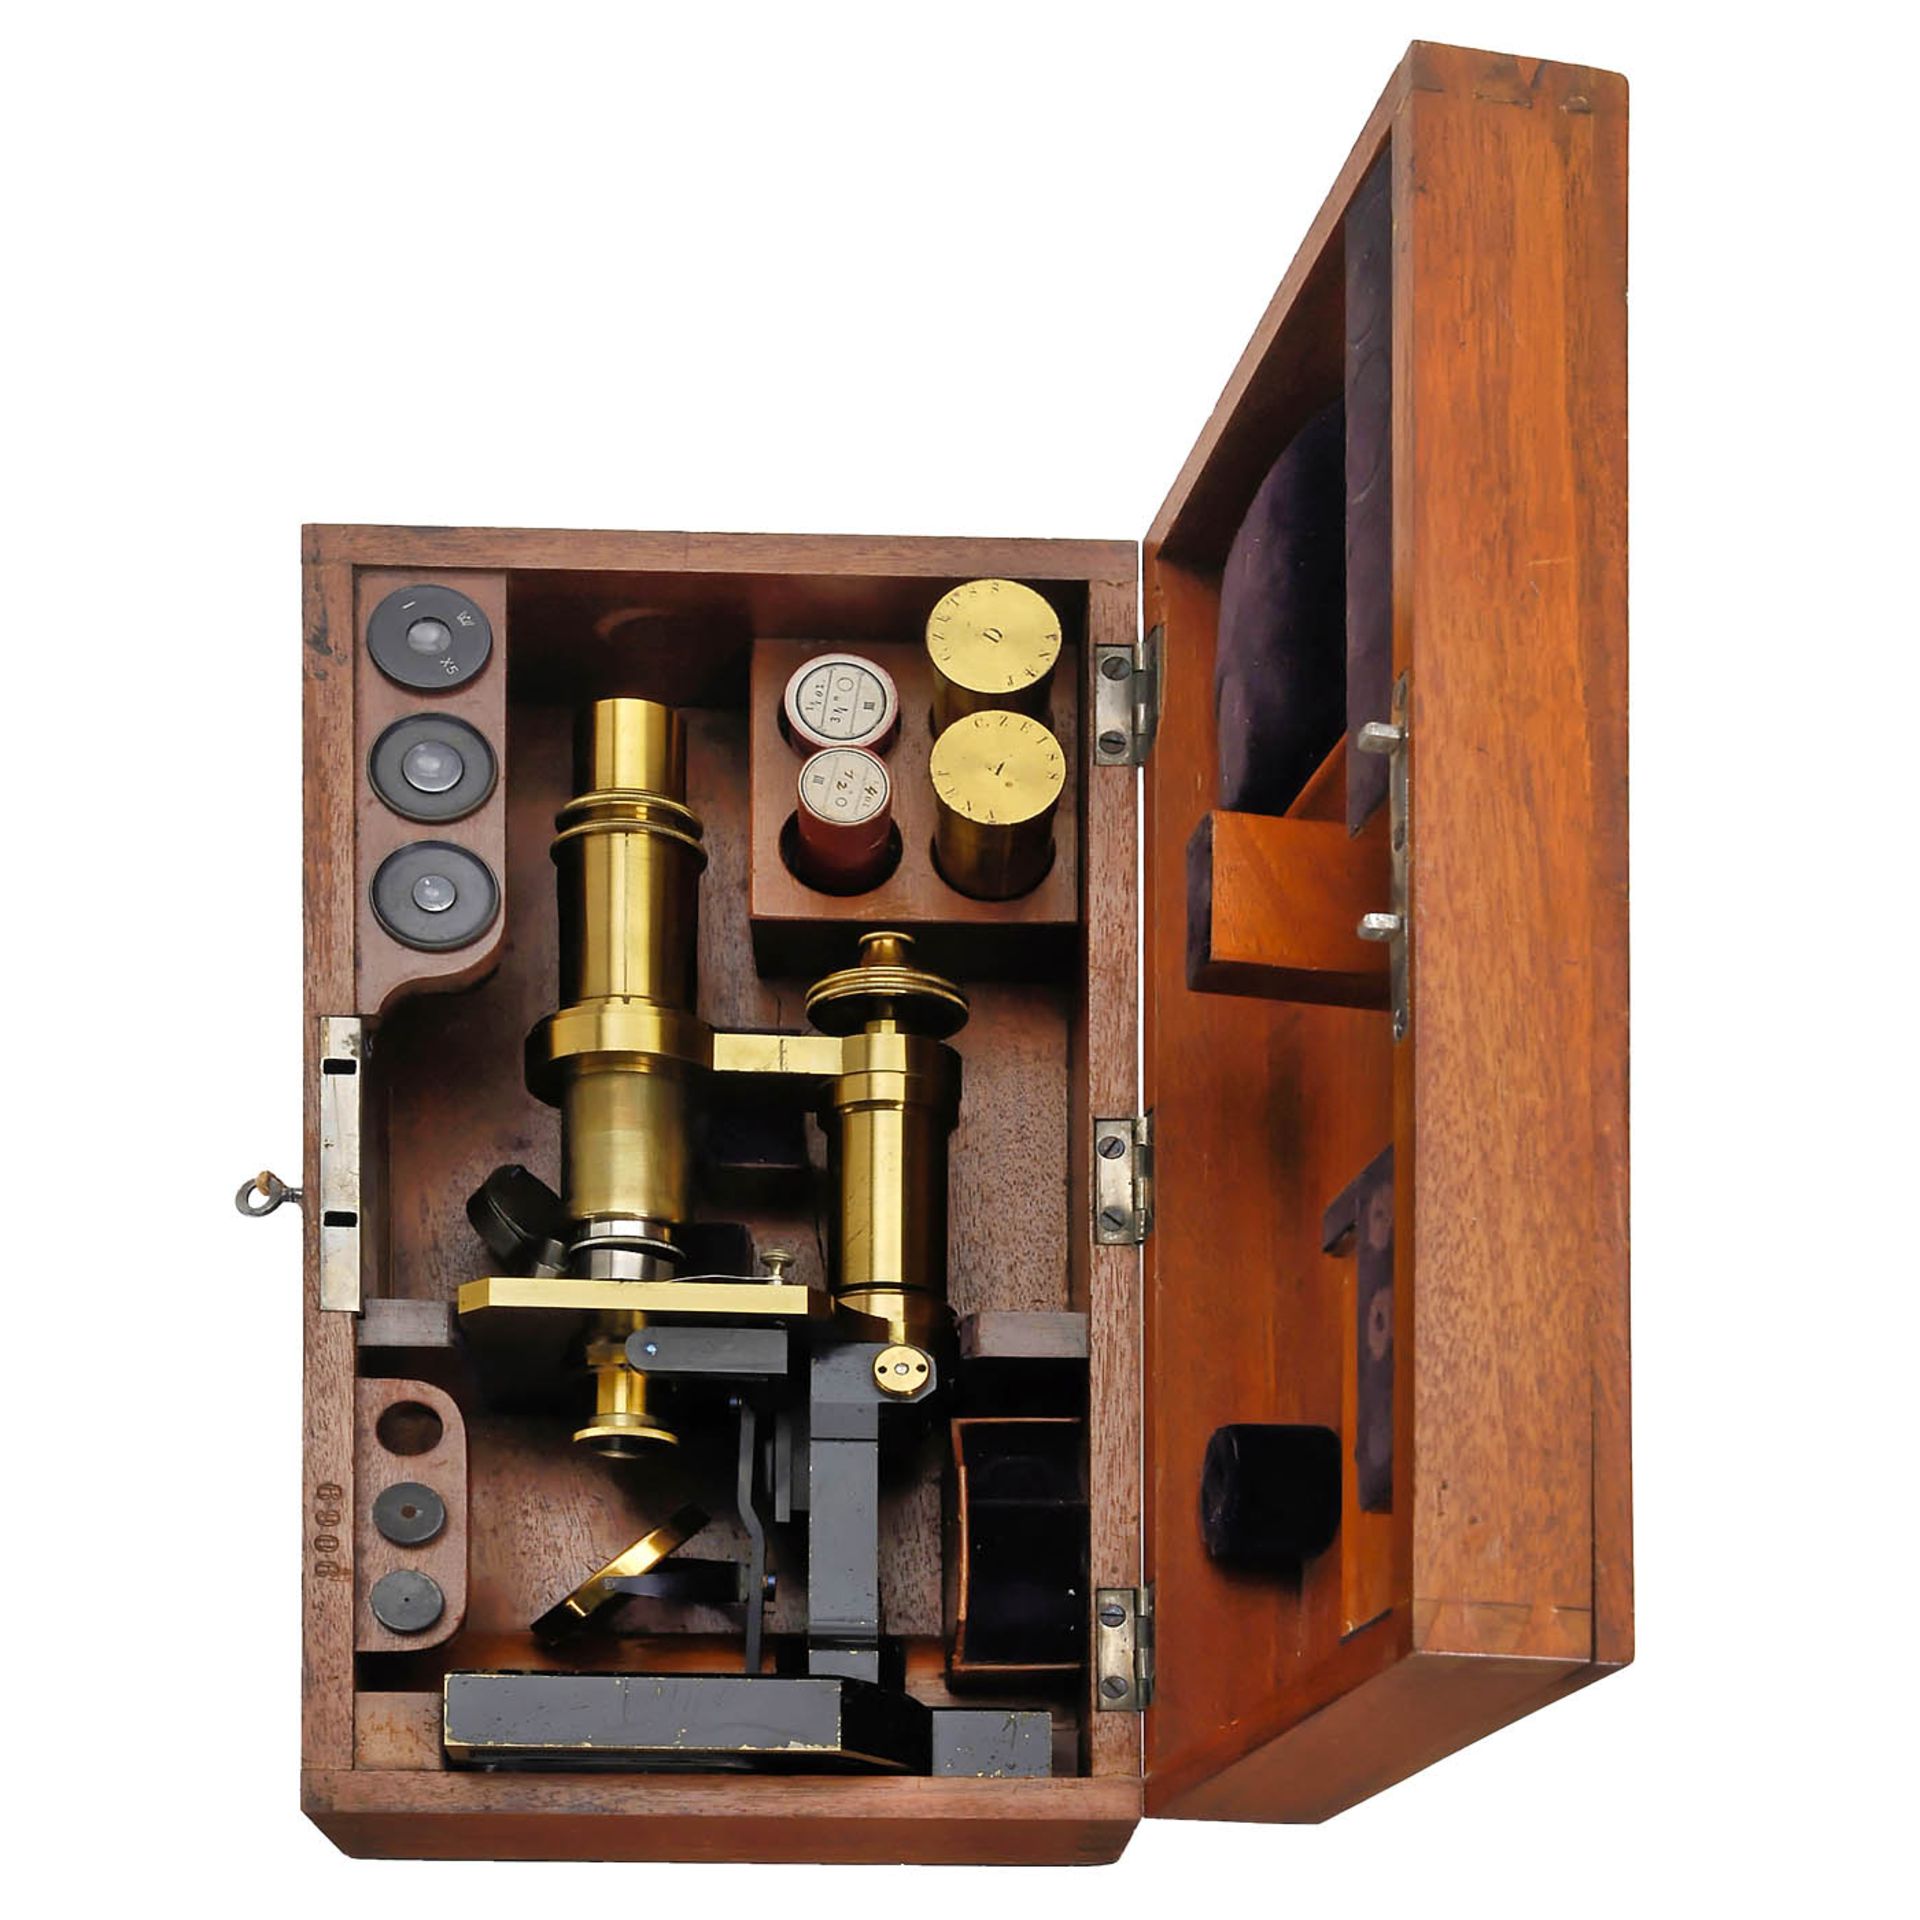 Forschungsmikroskop von Carl Zeiss, um 1886Signiert auf Tubusträger: C. Zeiss, Jena. Serien-Nr. - Image 3 of 3